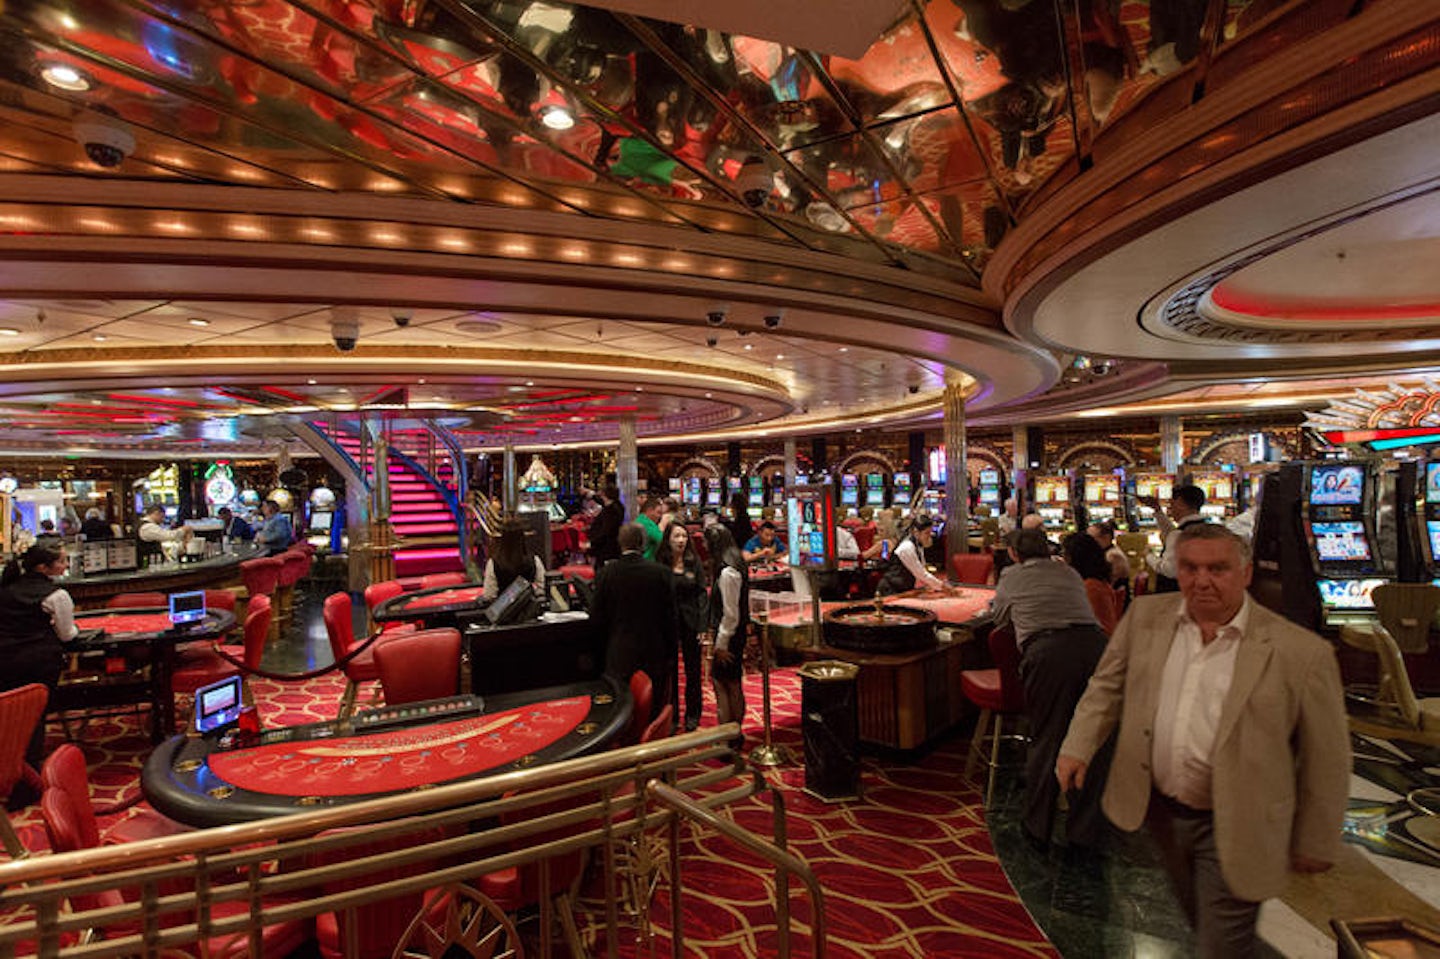 casino royale free cruise reddit